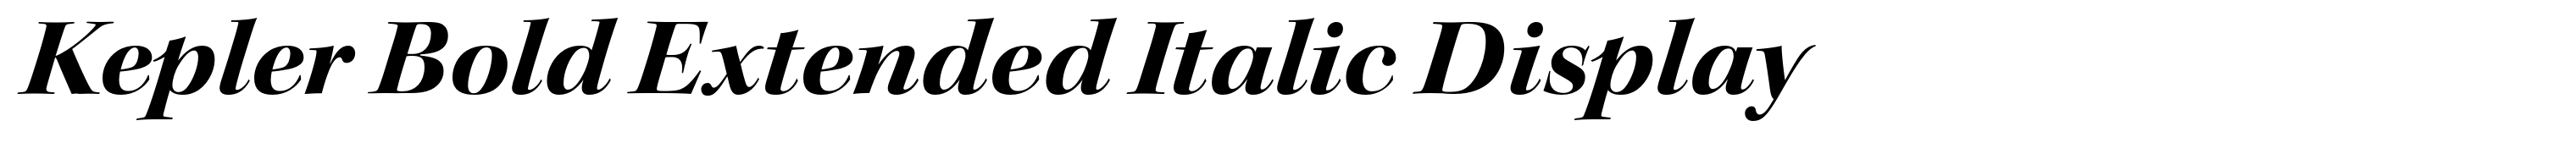 Kepler Bold Extended Italic Display